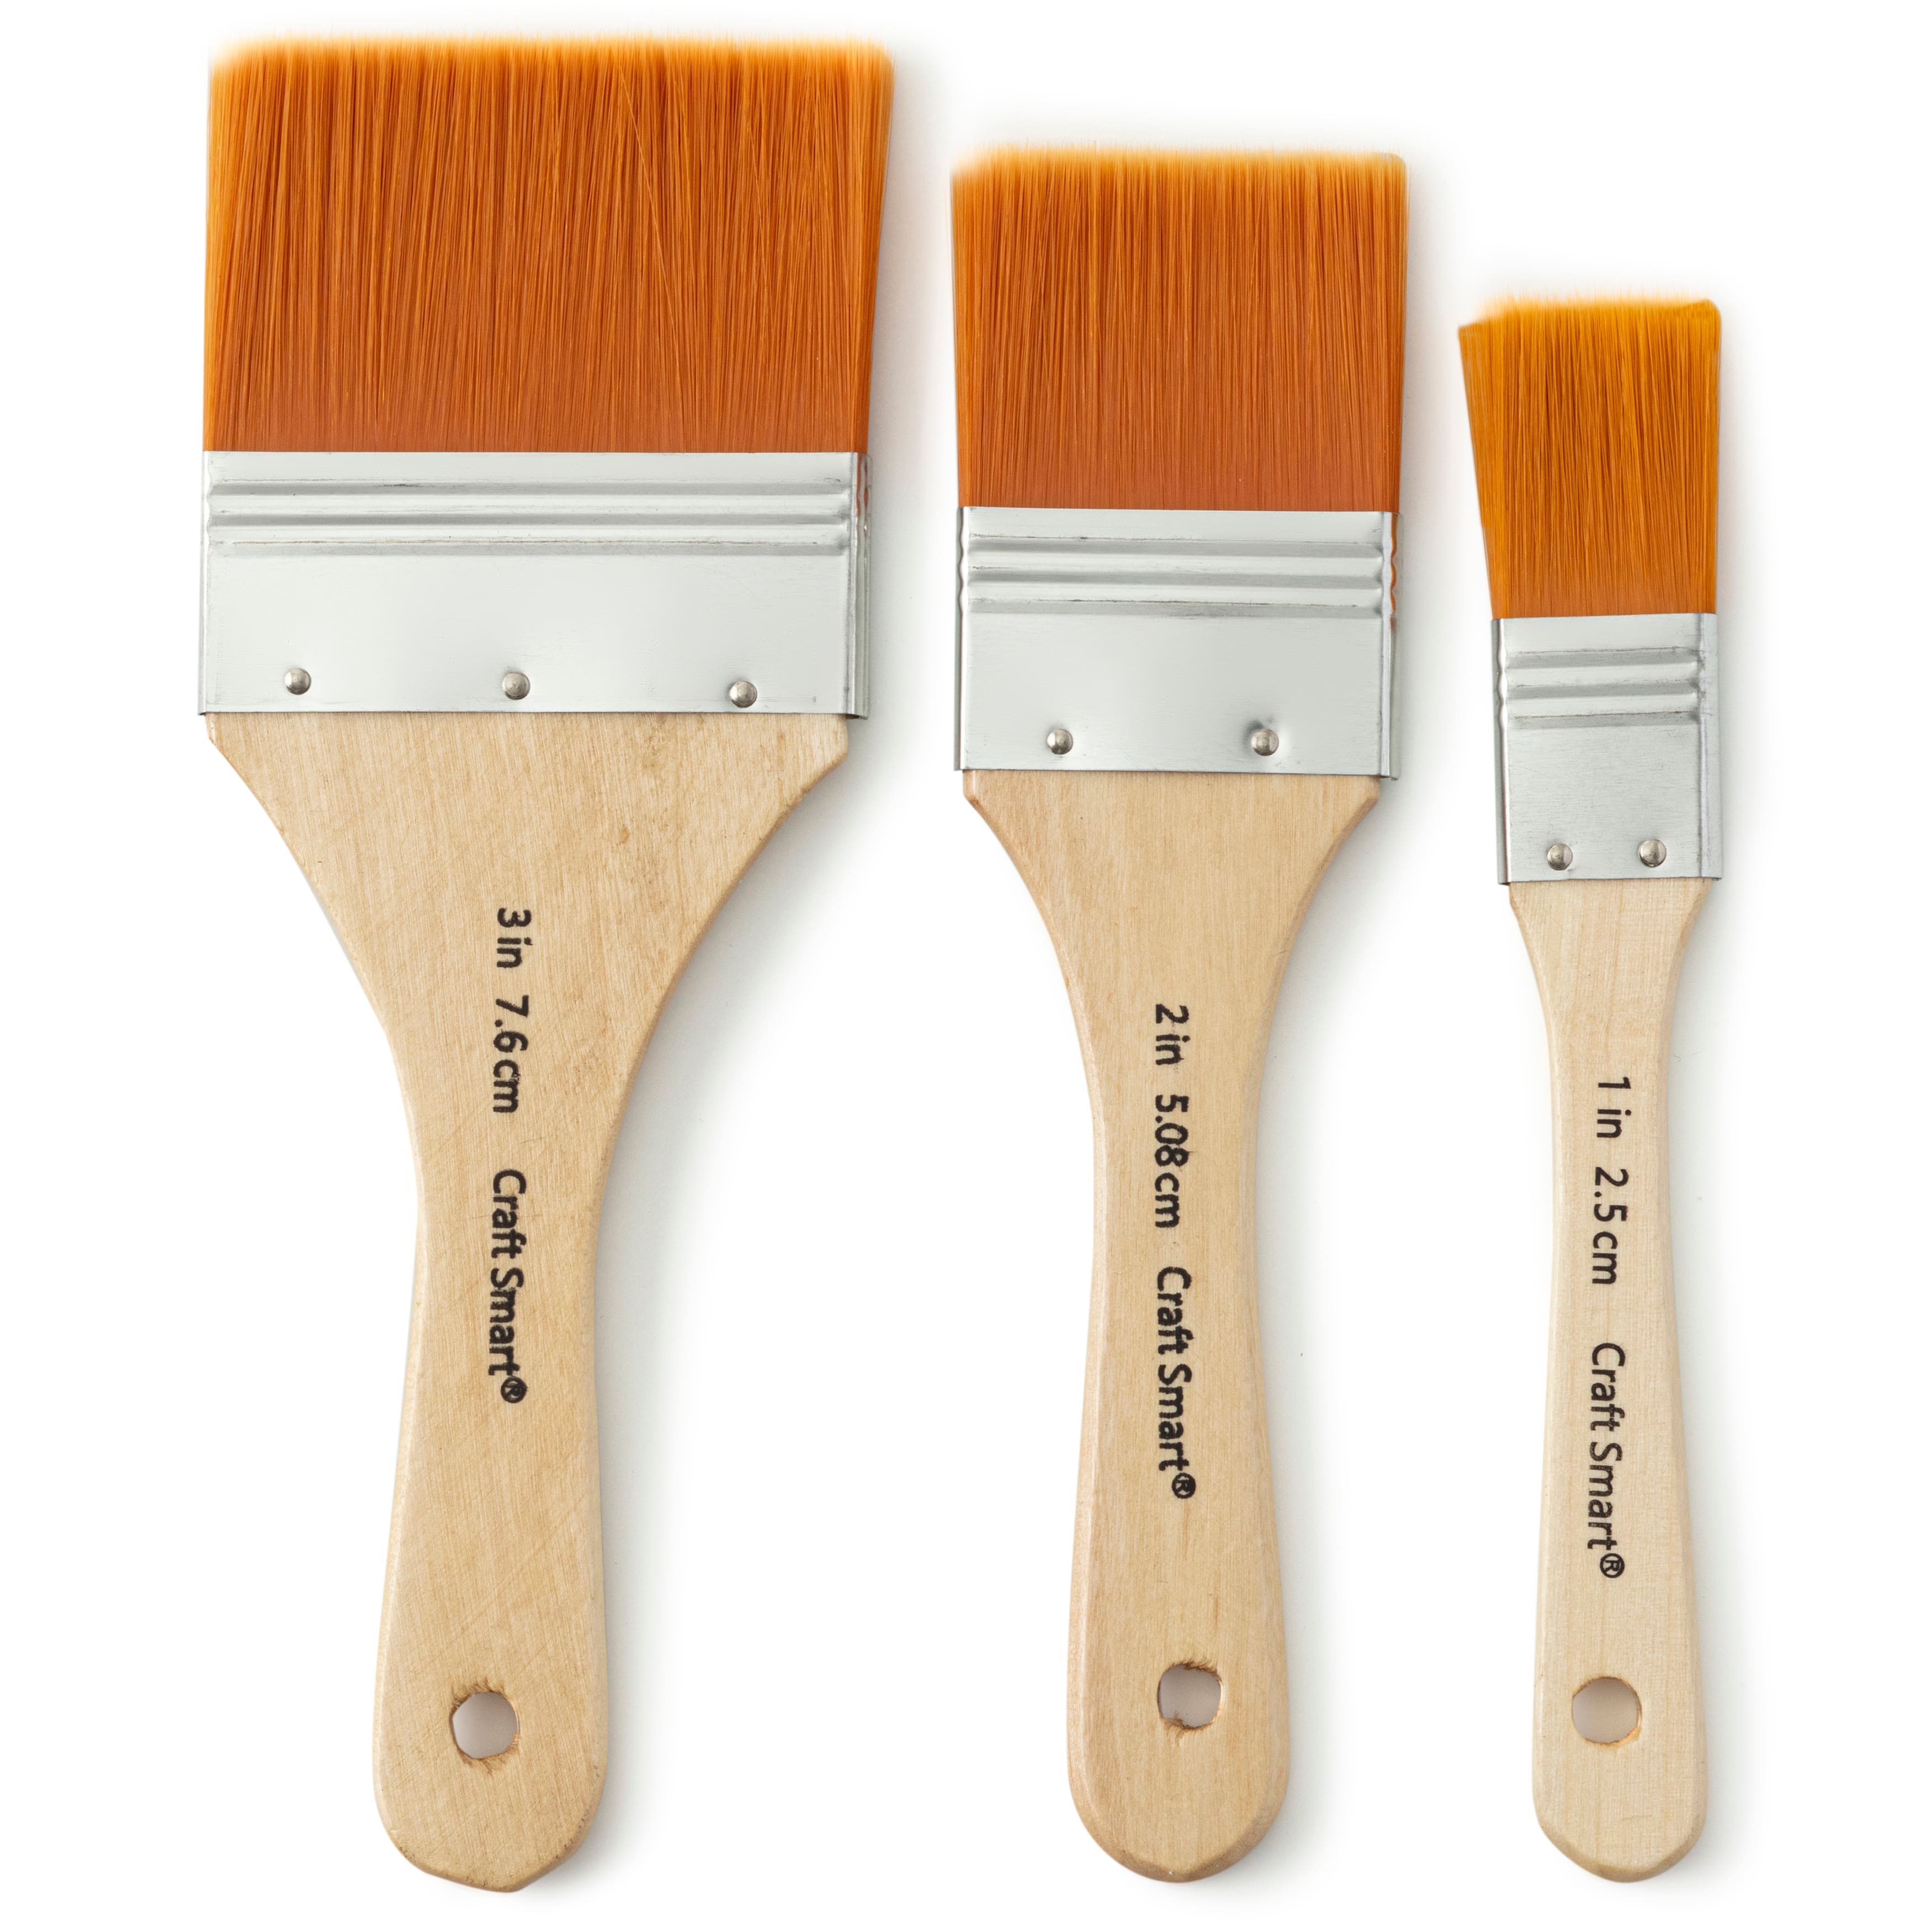 40 Pcs 1.5cm Foam Paint Brushes Round Sponge Brushes Kids Paint